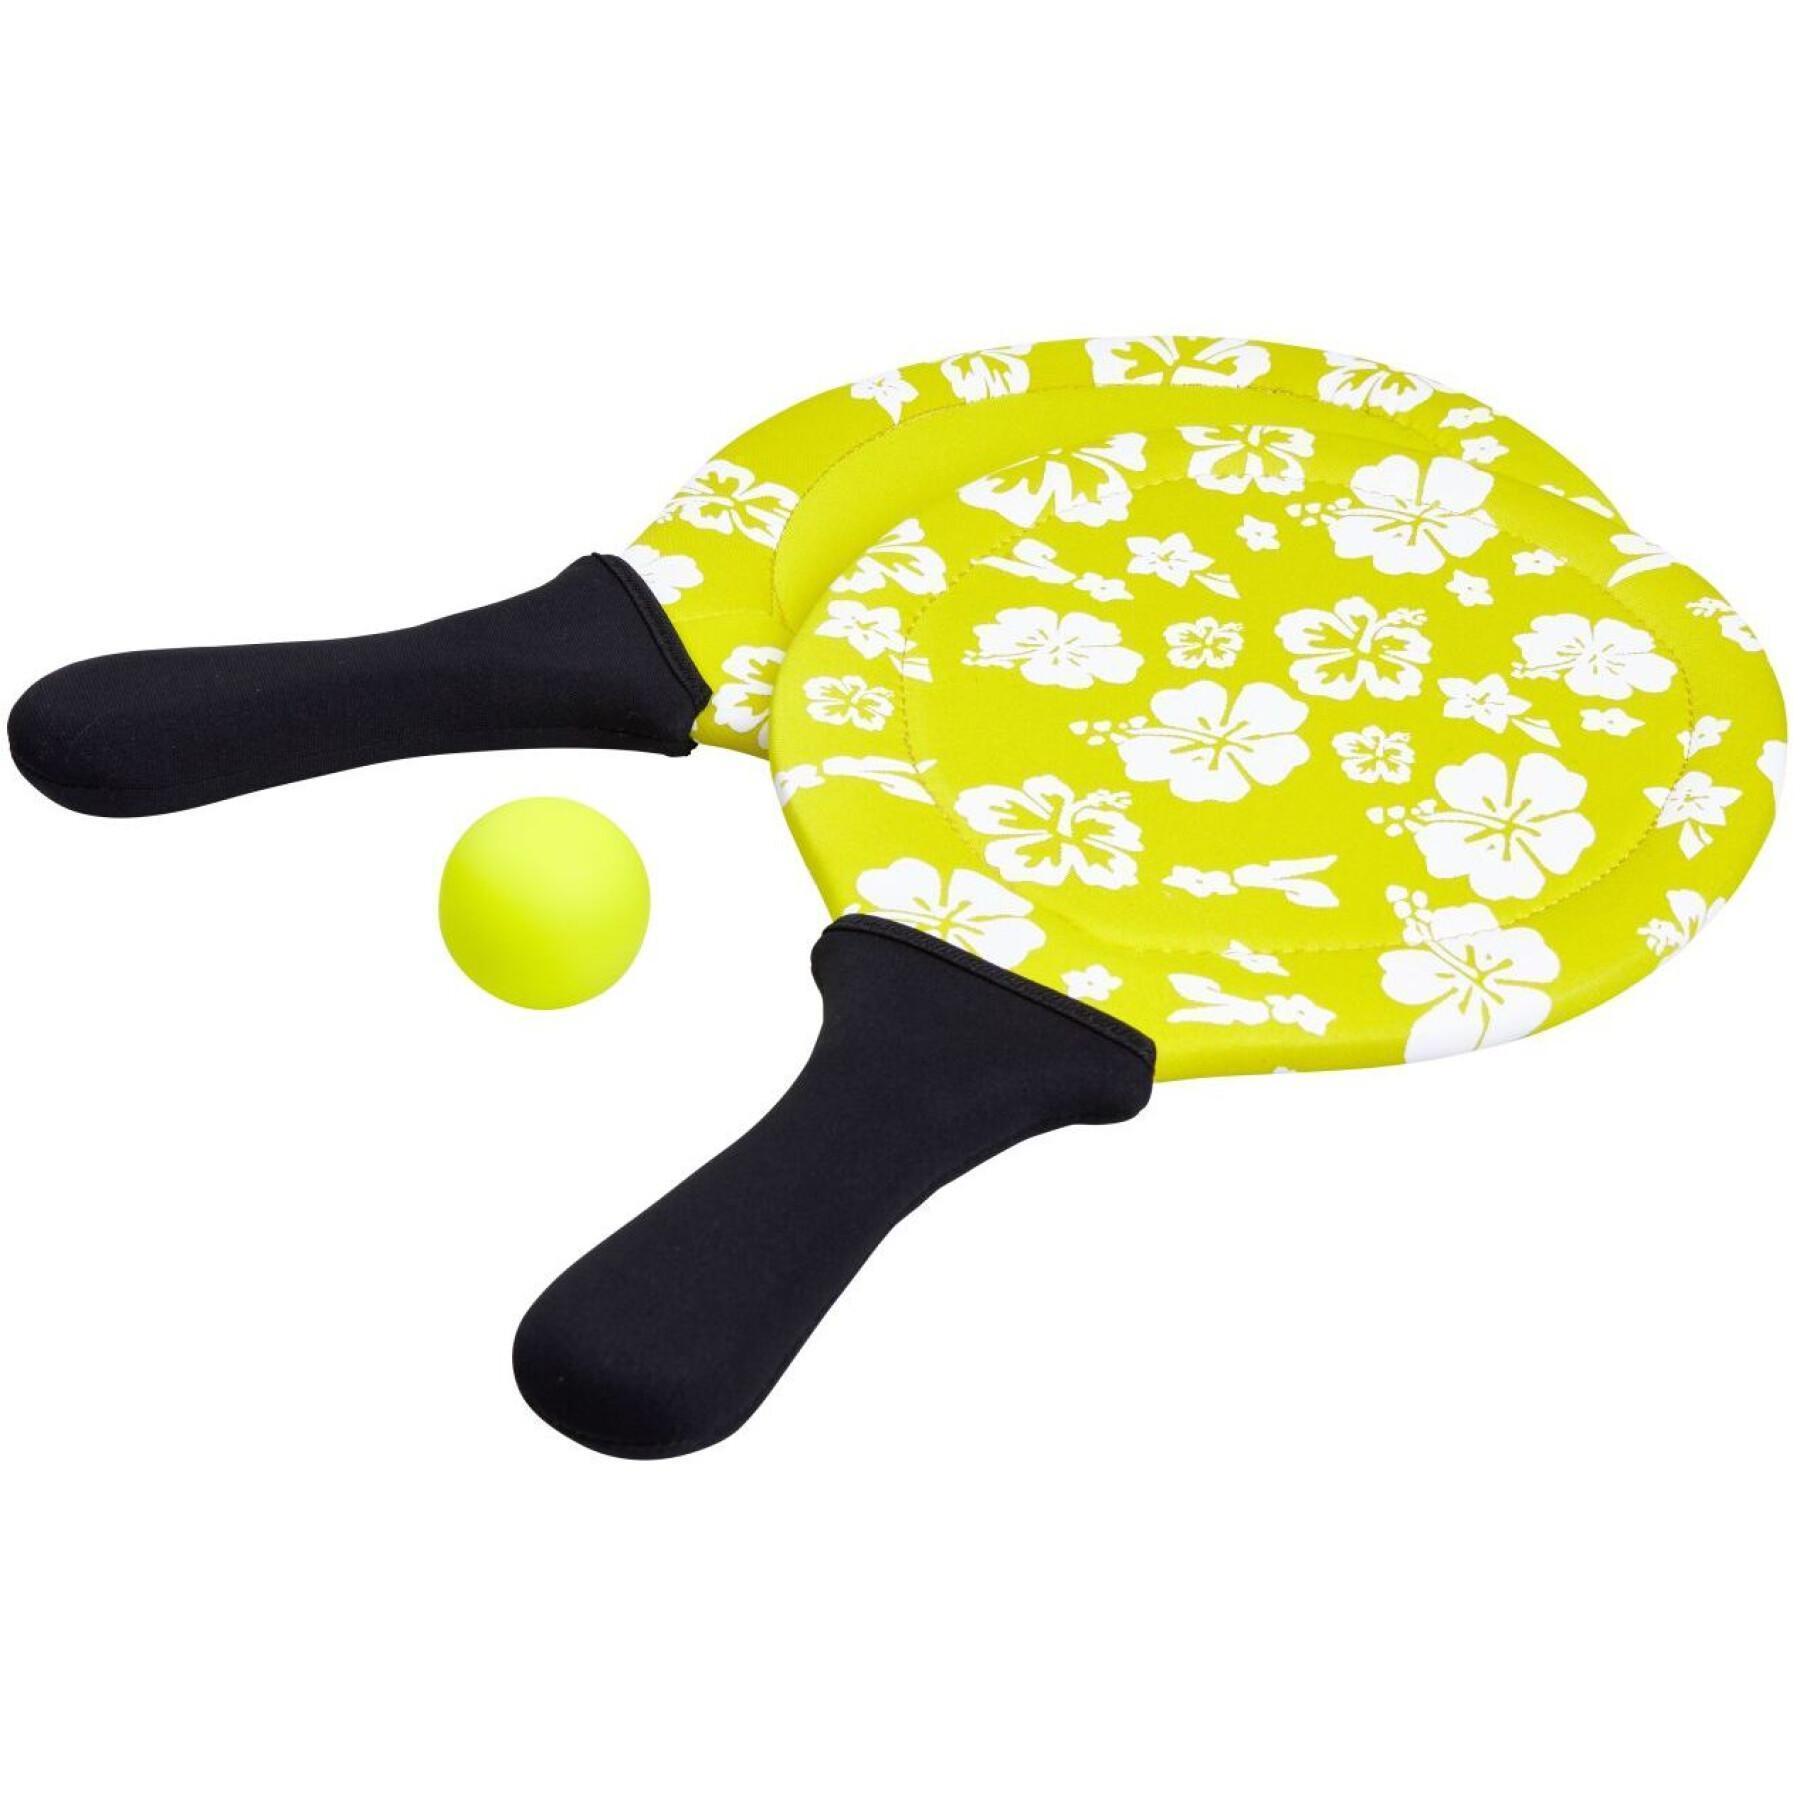 Children's table tennis racket Tanga sports Neoprene